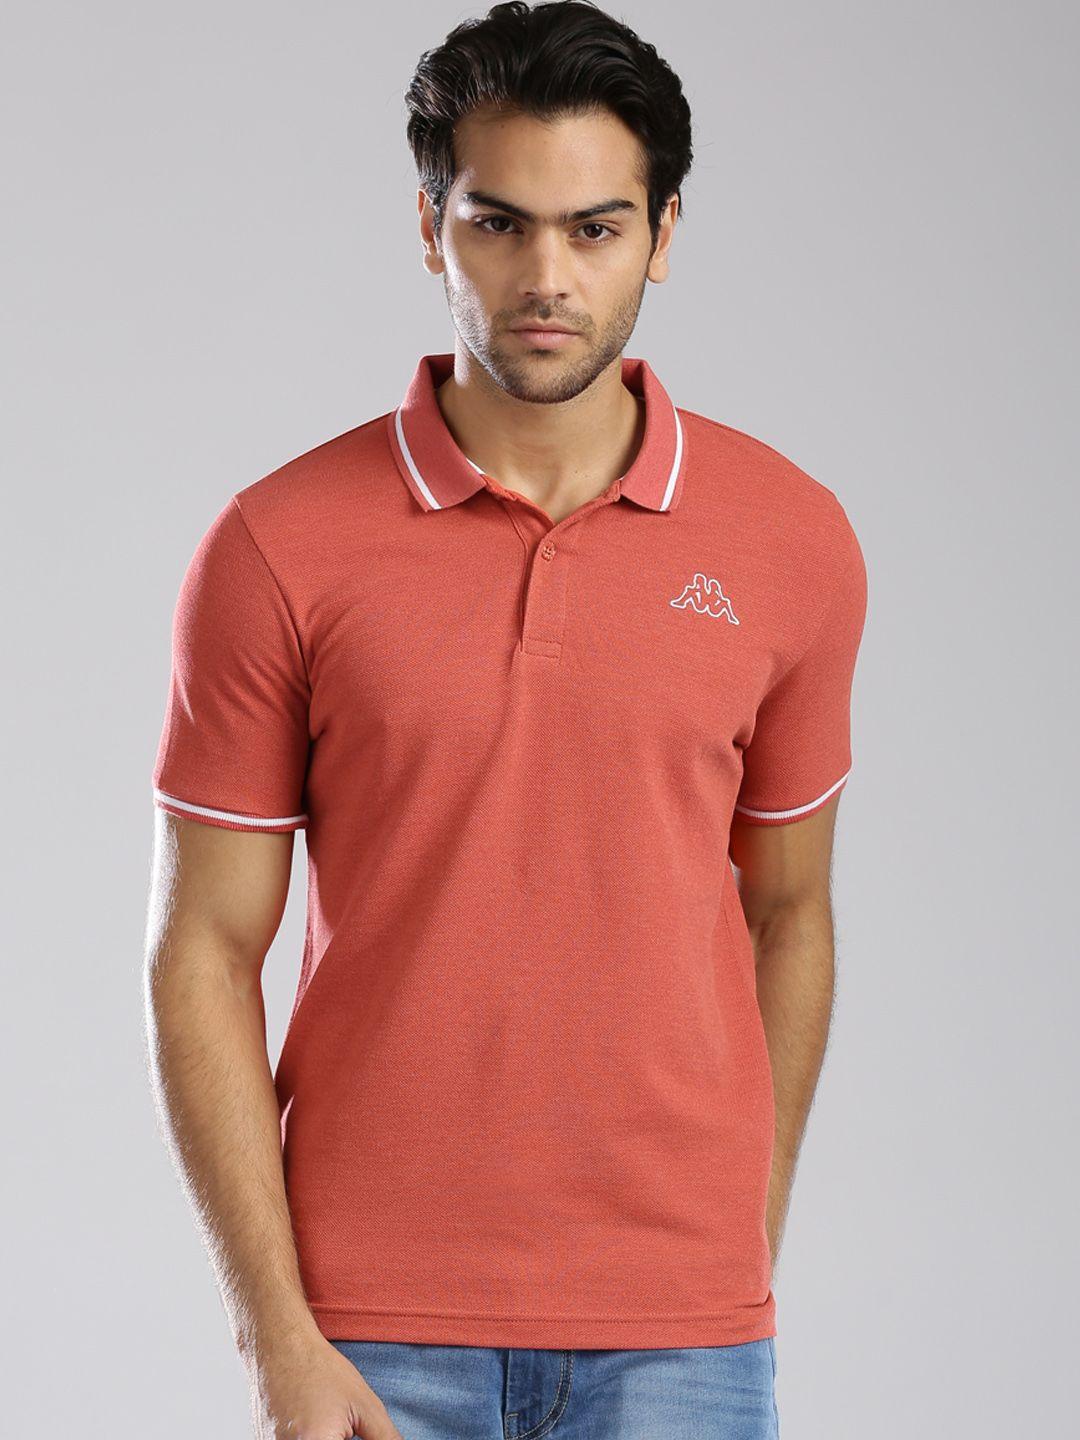 kappa-coral-red-polo-t-shirt